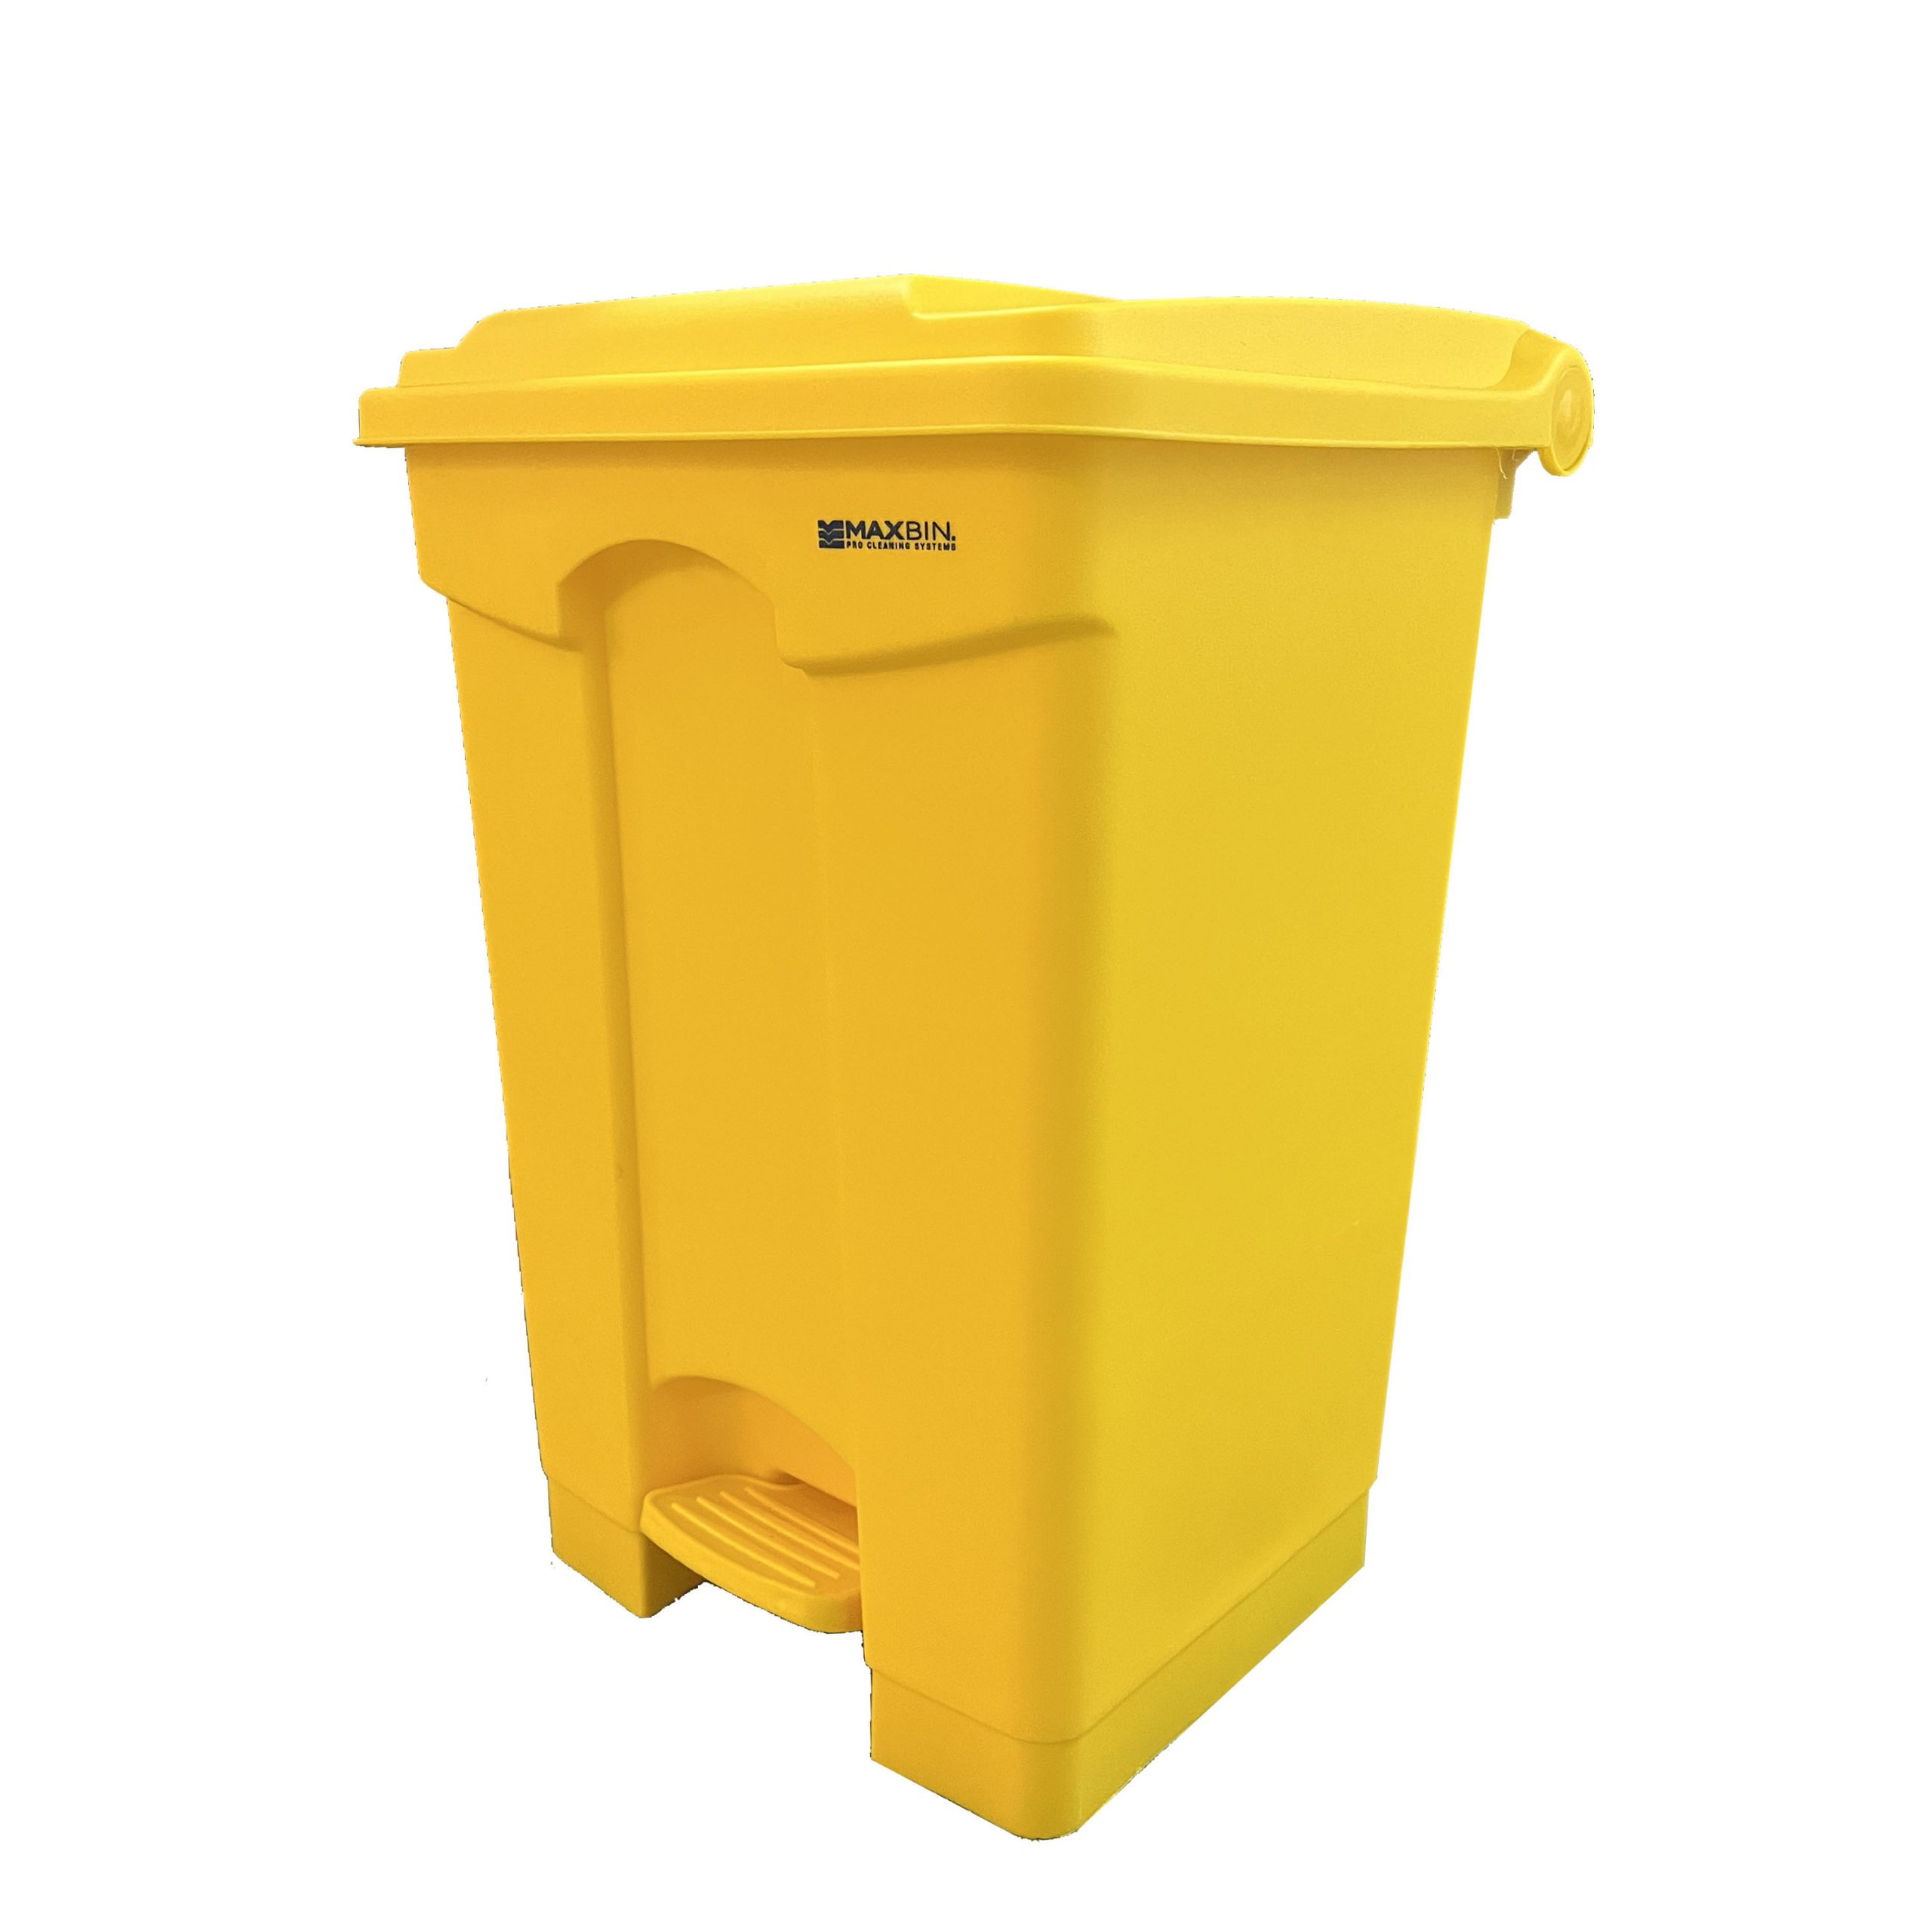 5 MaxBin 45L Heavy Duty Step Bin or Trash Can Yellow Angled